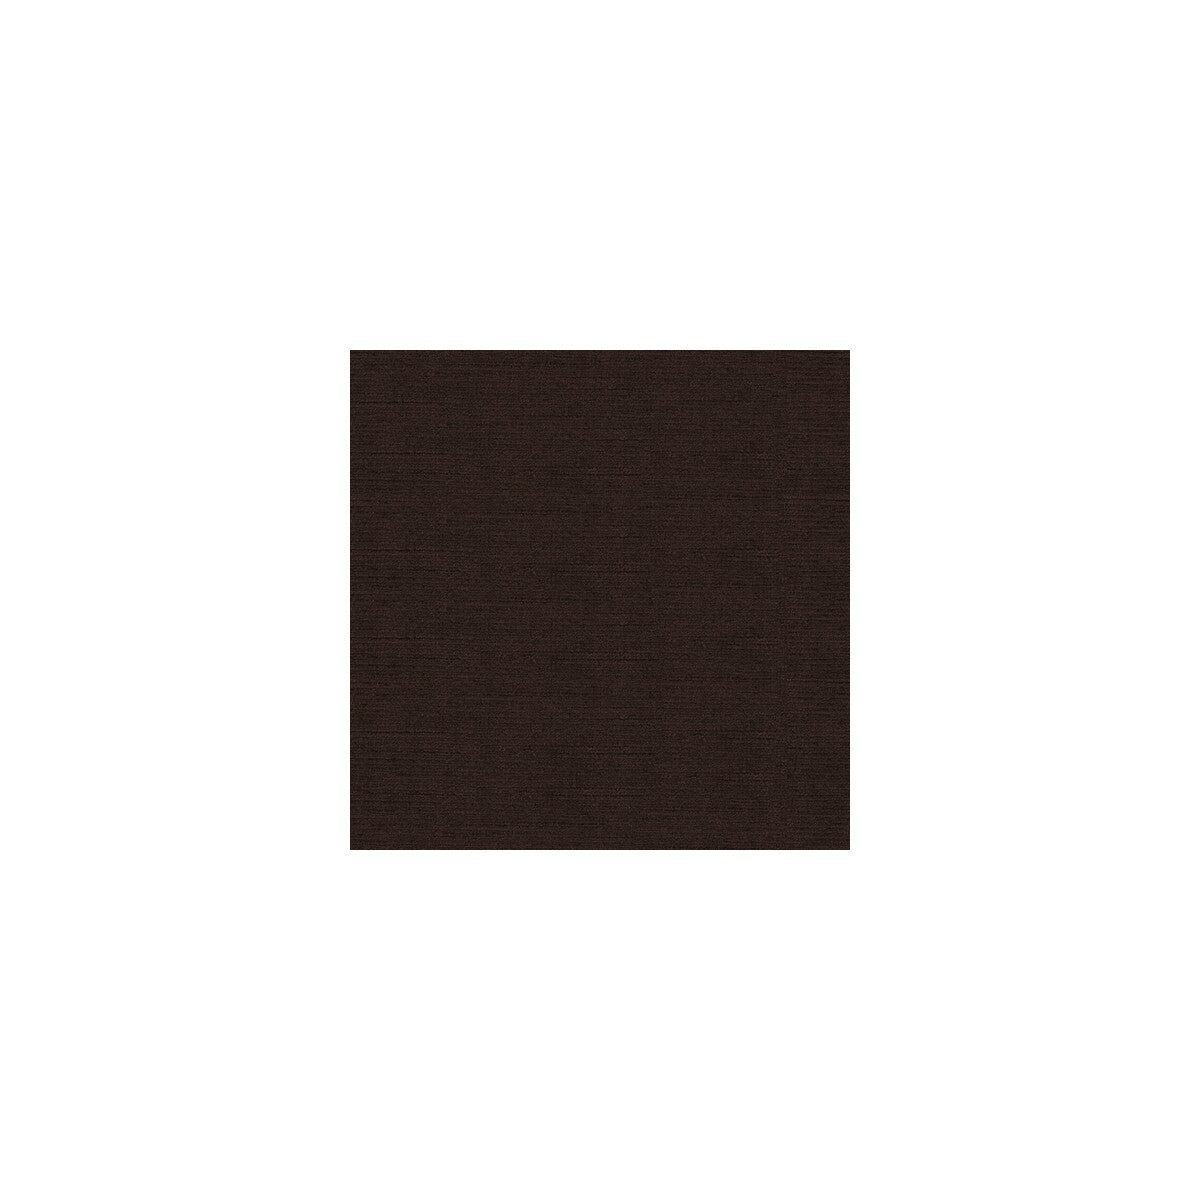 Venetian fabric in brown color - pattern 31326.6666.0 - by Kravet Design